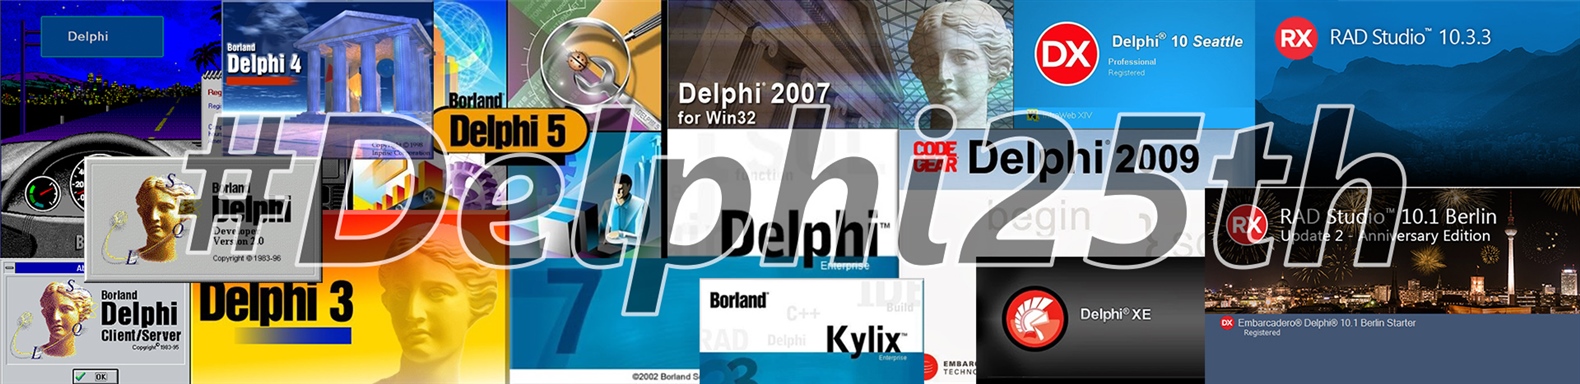 #Delphi25th